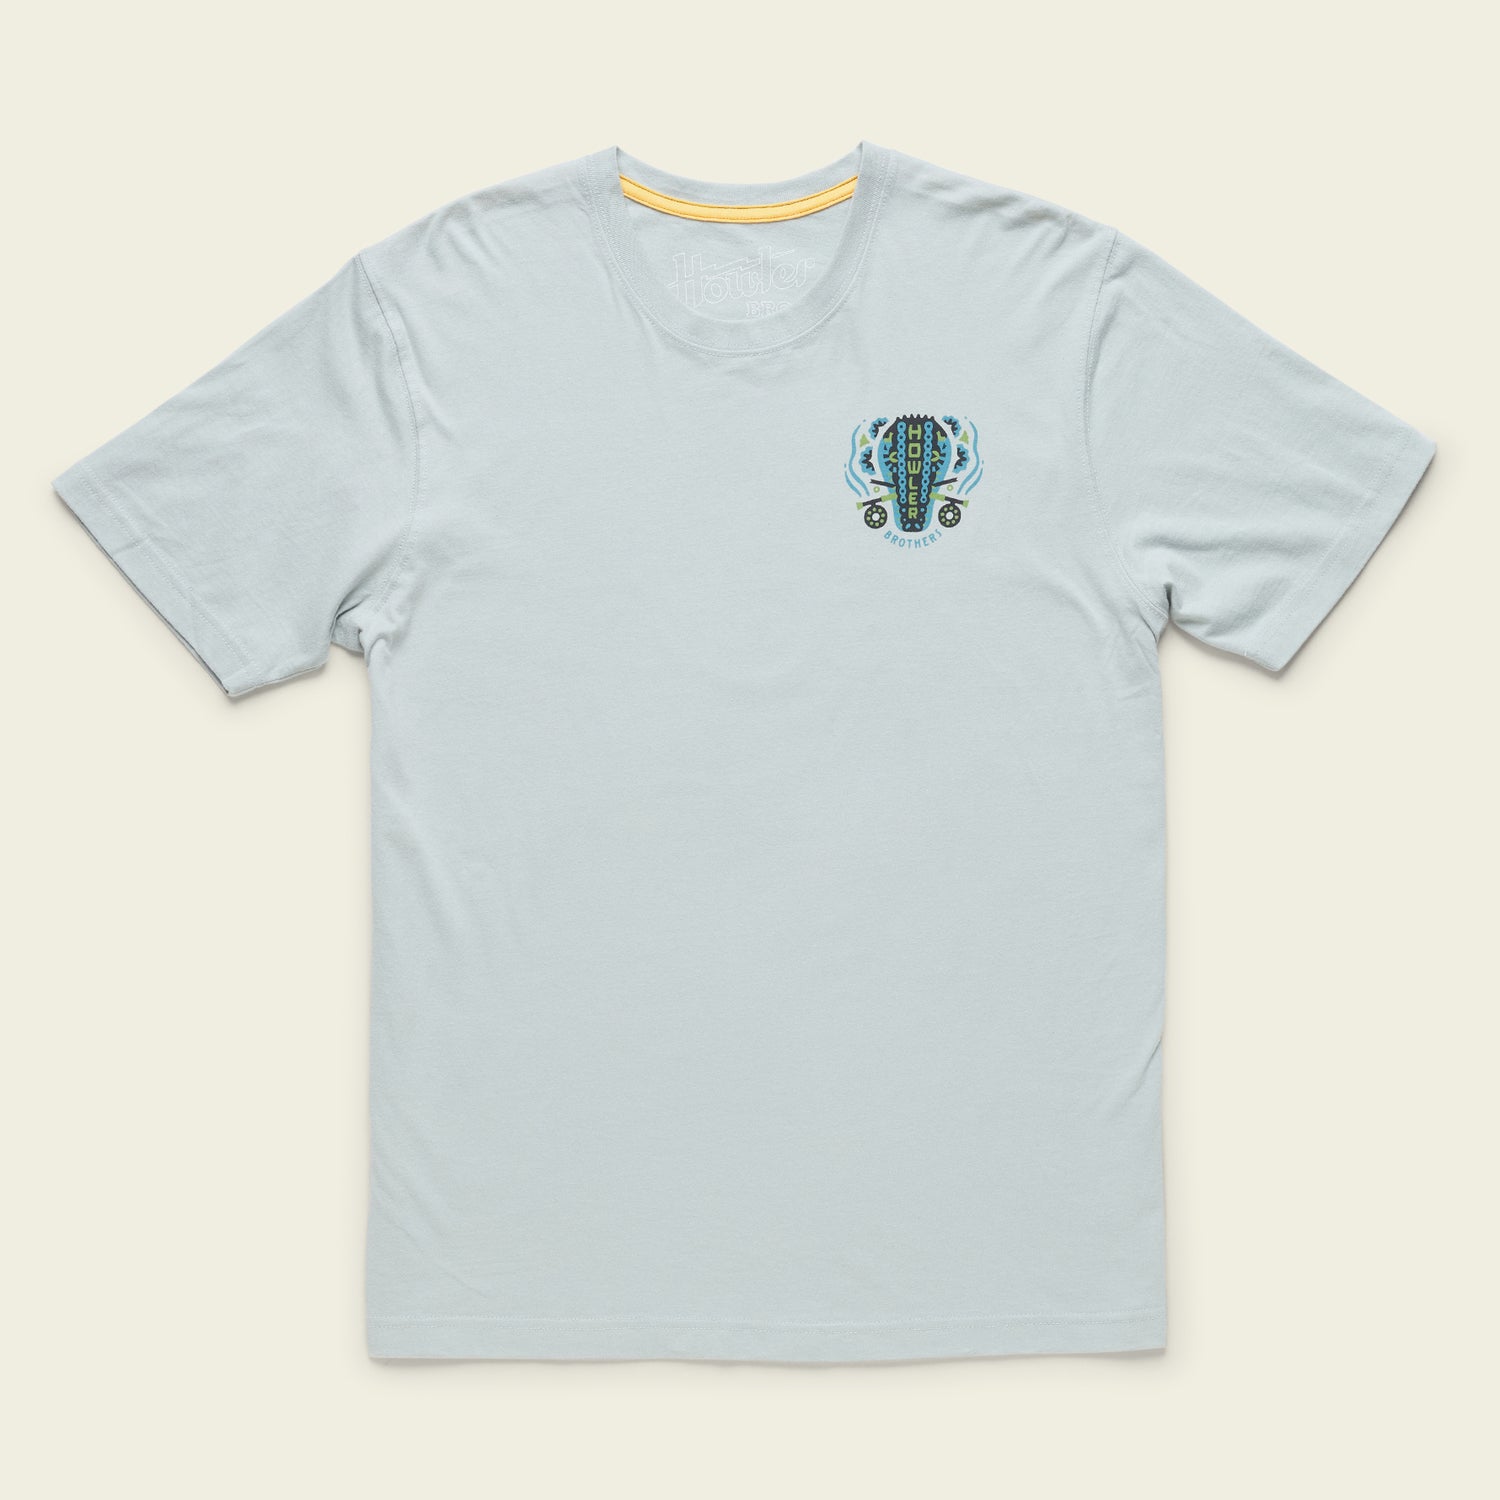 Gator Chomp Cotton T-Shirt